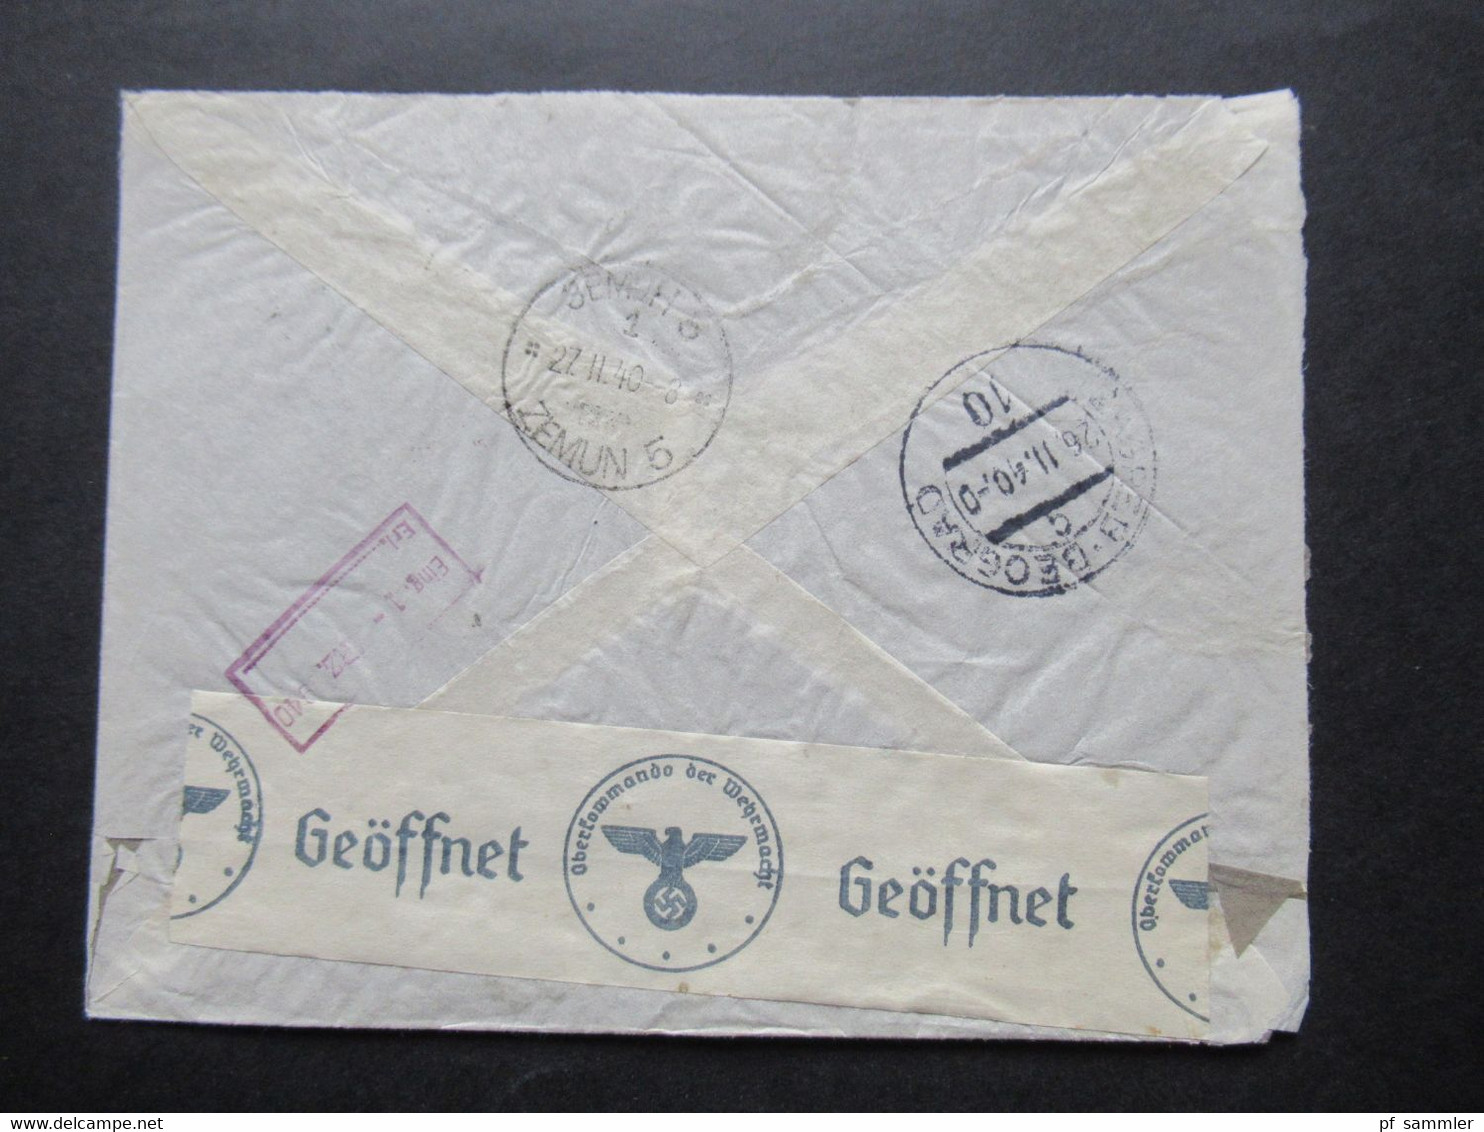 Jugoslawien 1940 Zensurbeleg / OKW Zensur / Mehrfachzensur Luftpost Jugofarmacija D.D. An Westphalen & Co. In Hamburg - Lettres & Documents